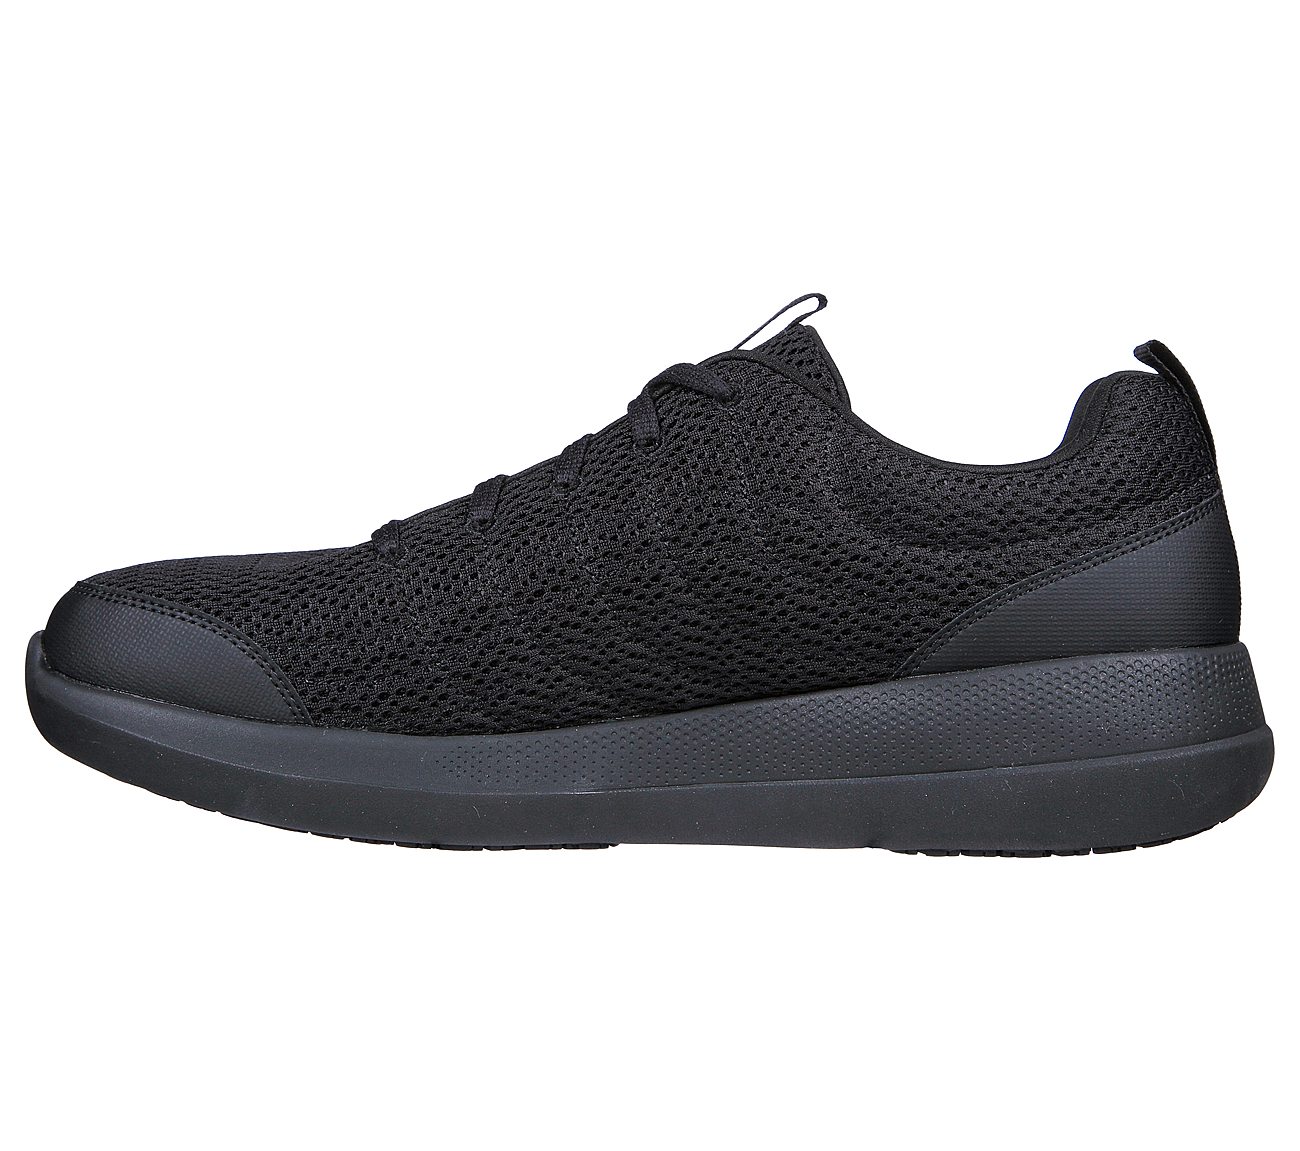 Skechers Black Go Walk Stability Advanceme Mens Lace Up Shoes - Style ...